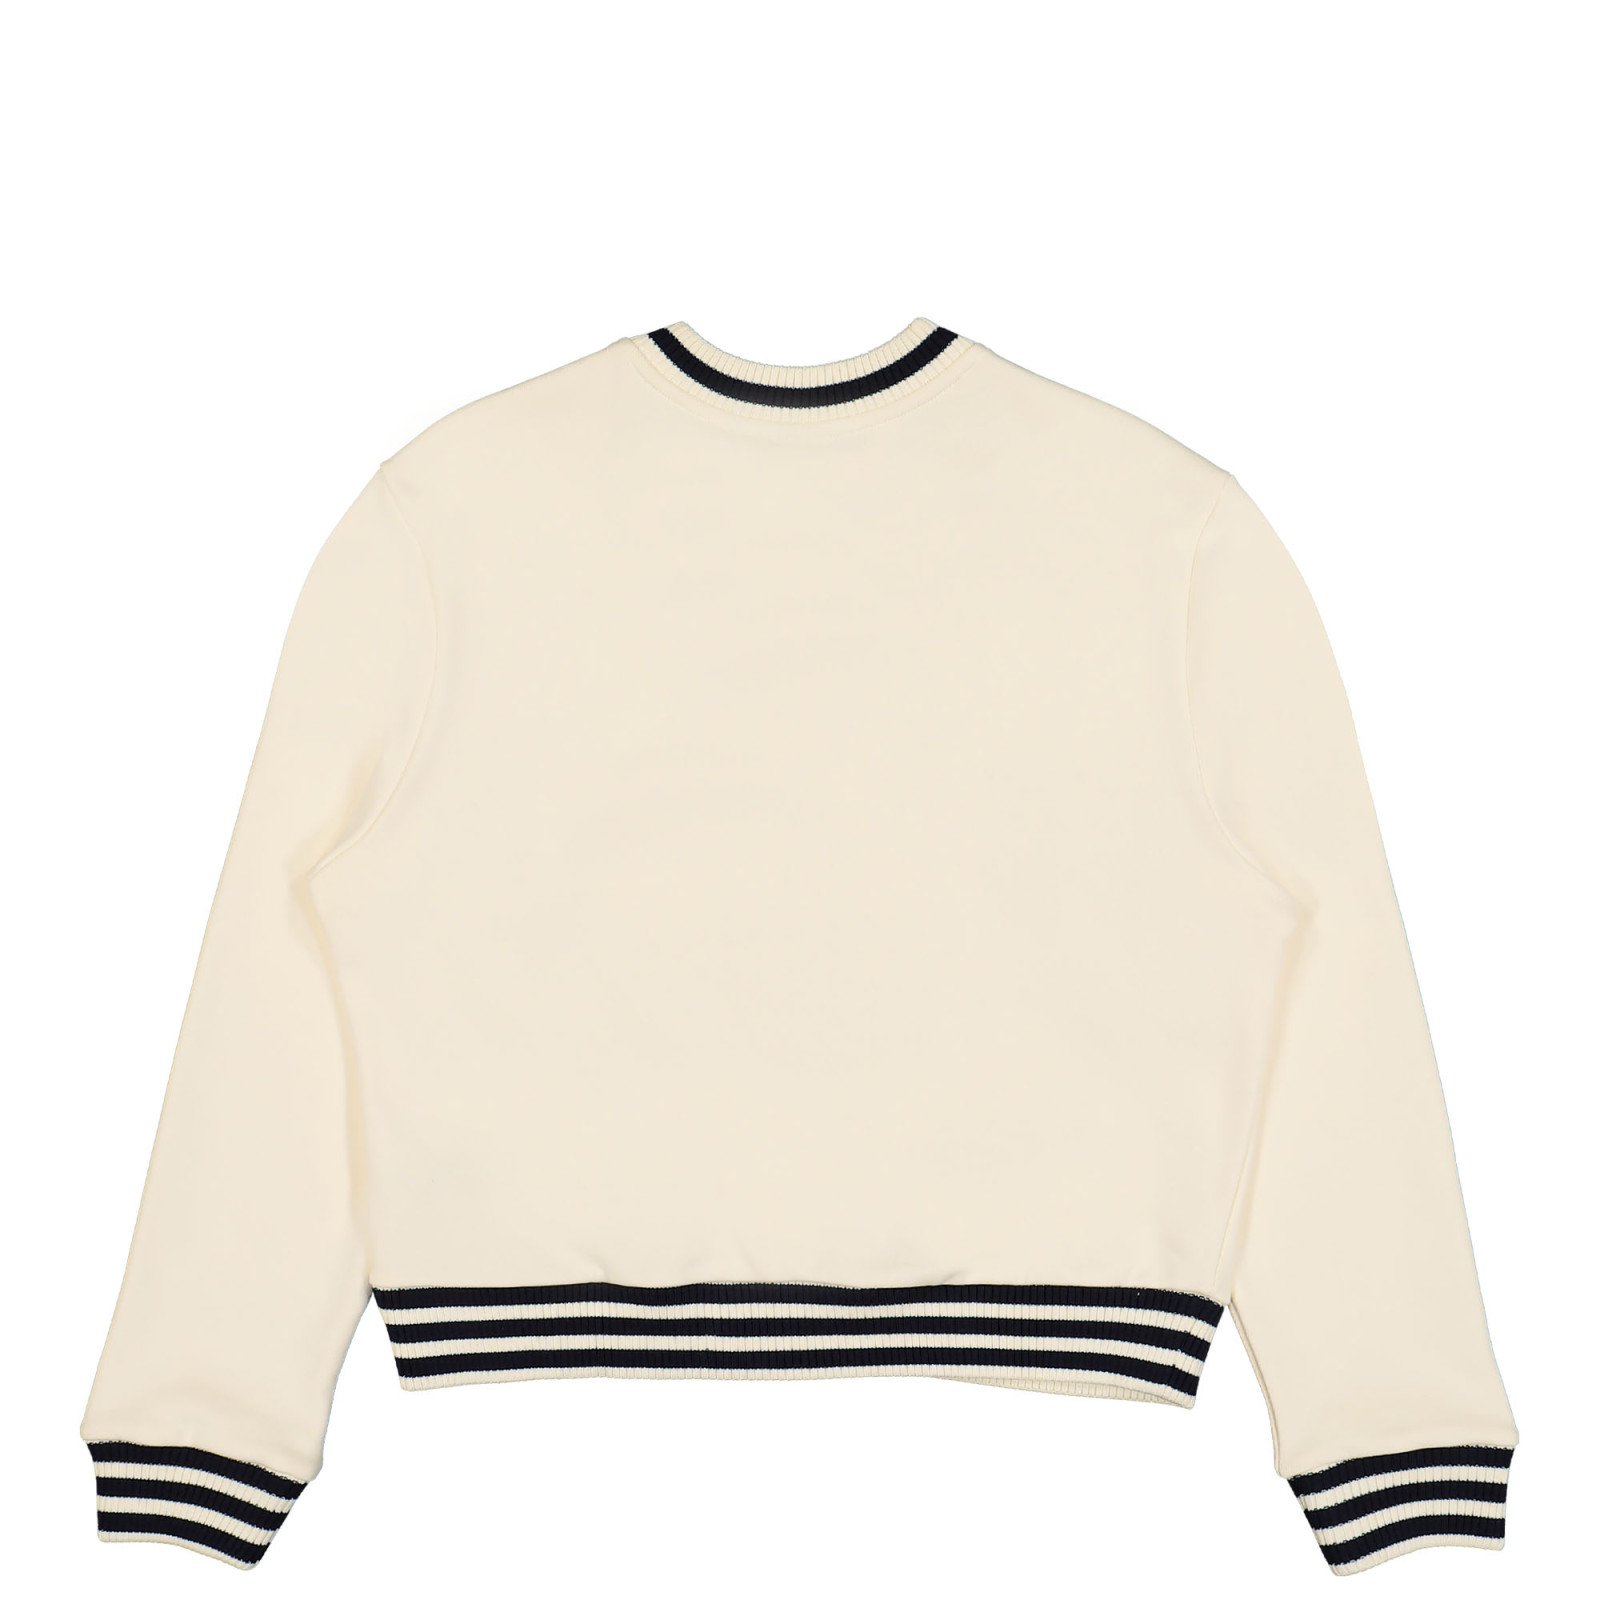 SPORTY & RICH x Adidas
Neck Crew Sweater
Crew White